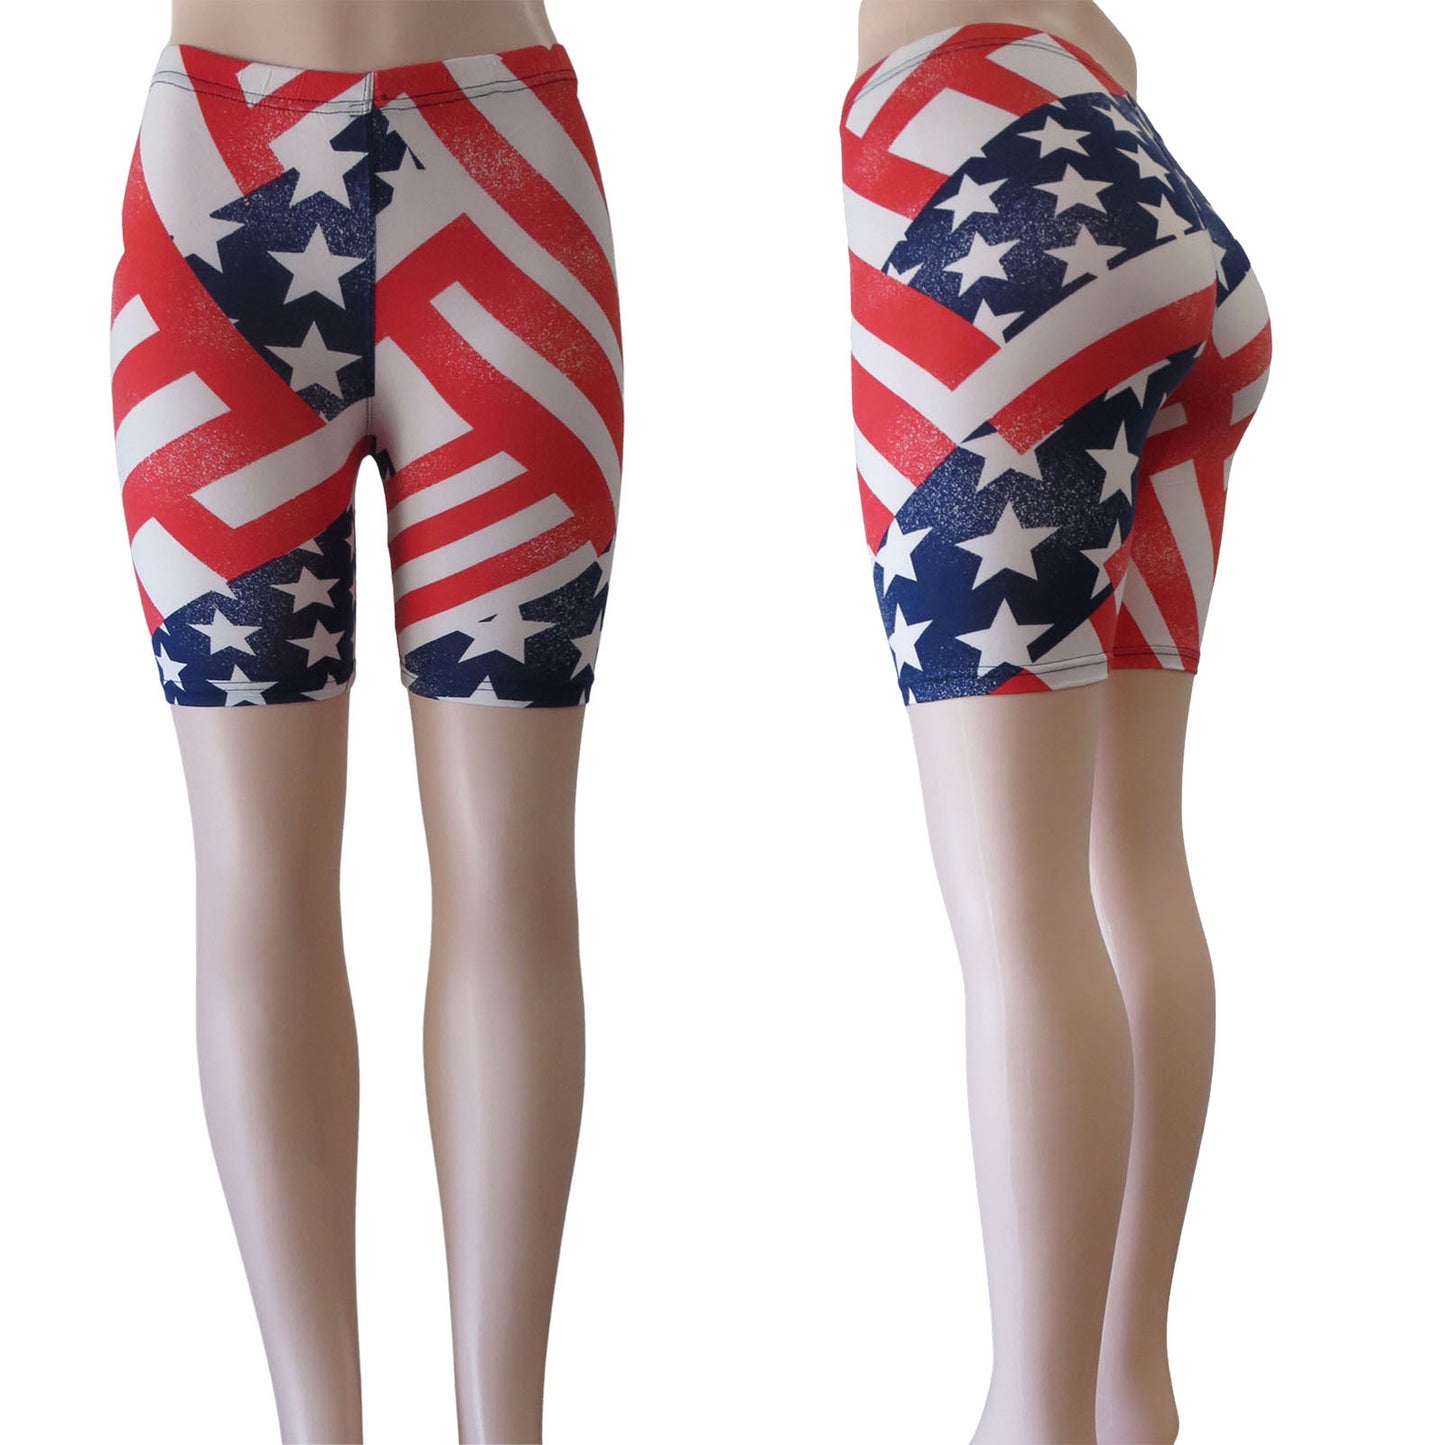 americana butter soft bike shorts in flag themed prints